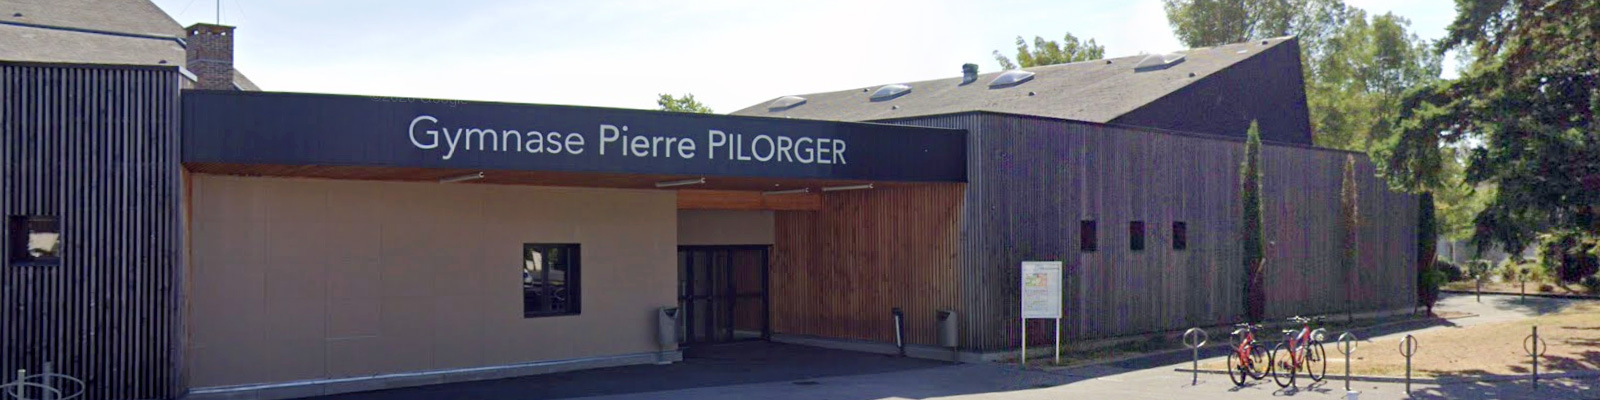 Gymnase Pierre Pilorger